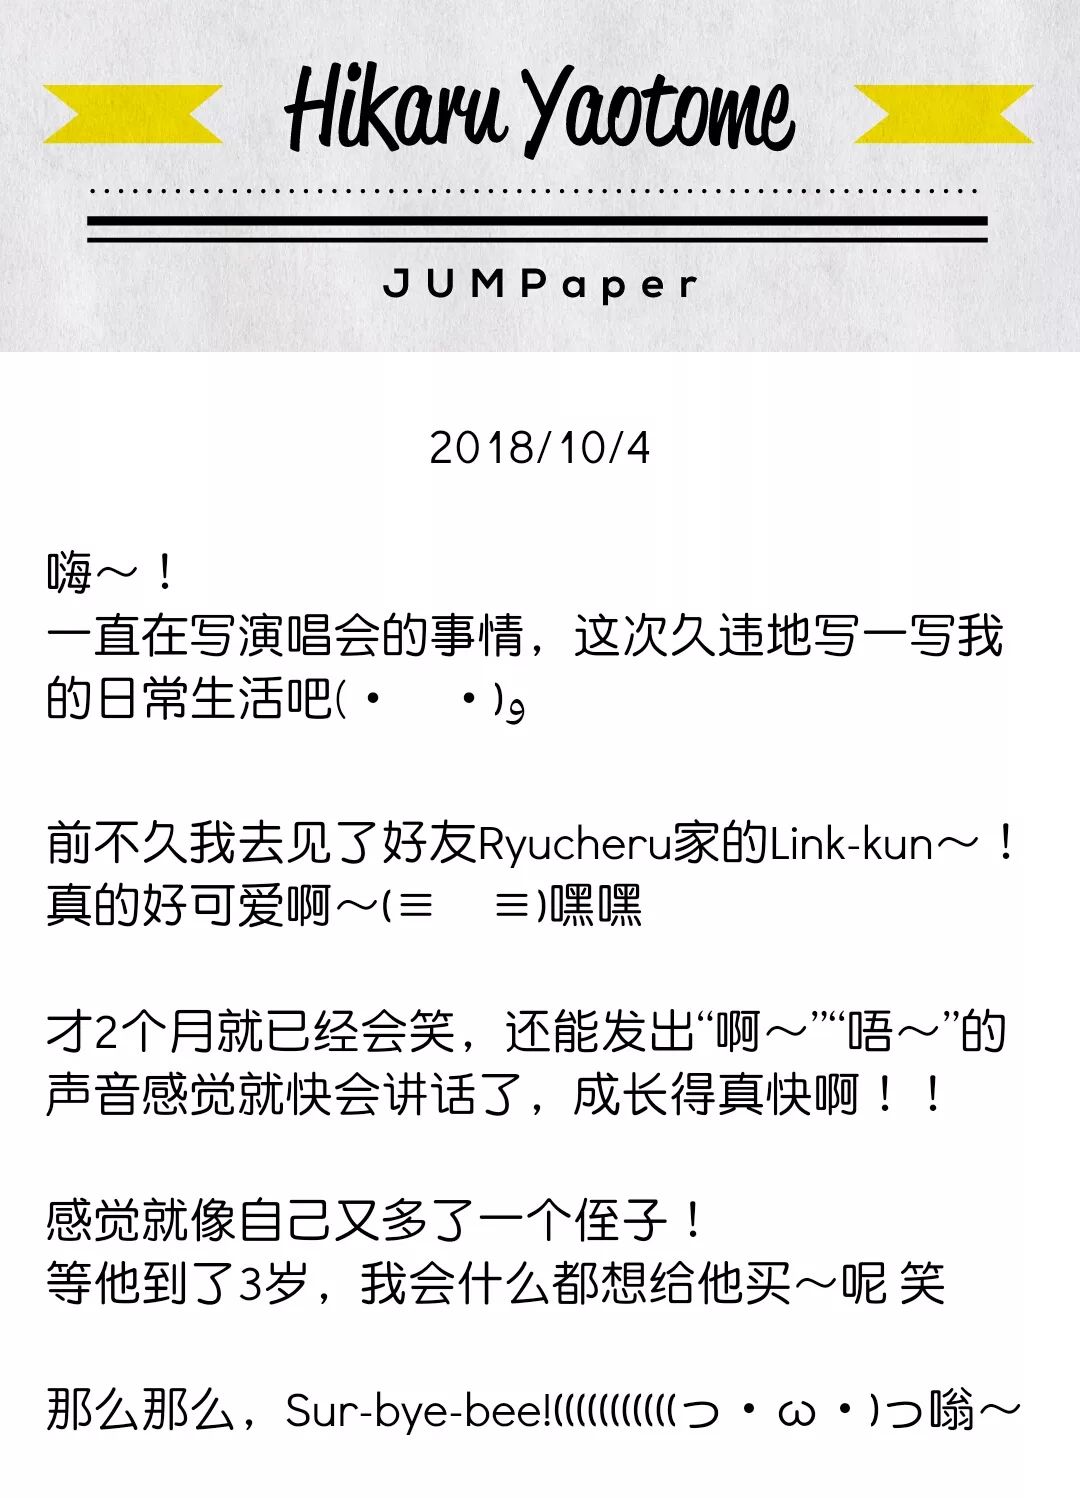 Jumpaper 传说中的合集 Heysayjump梦幻游乐园 微信公众号文章阅读 Wemp